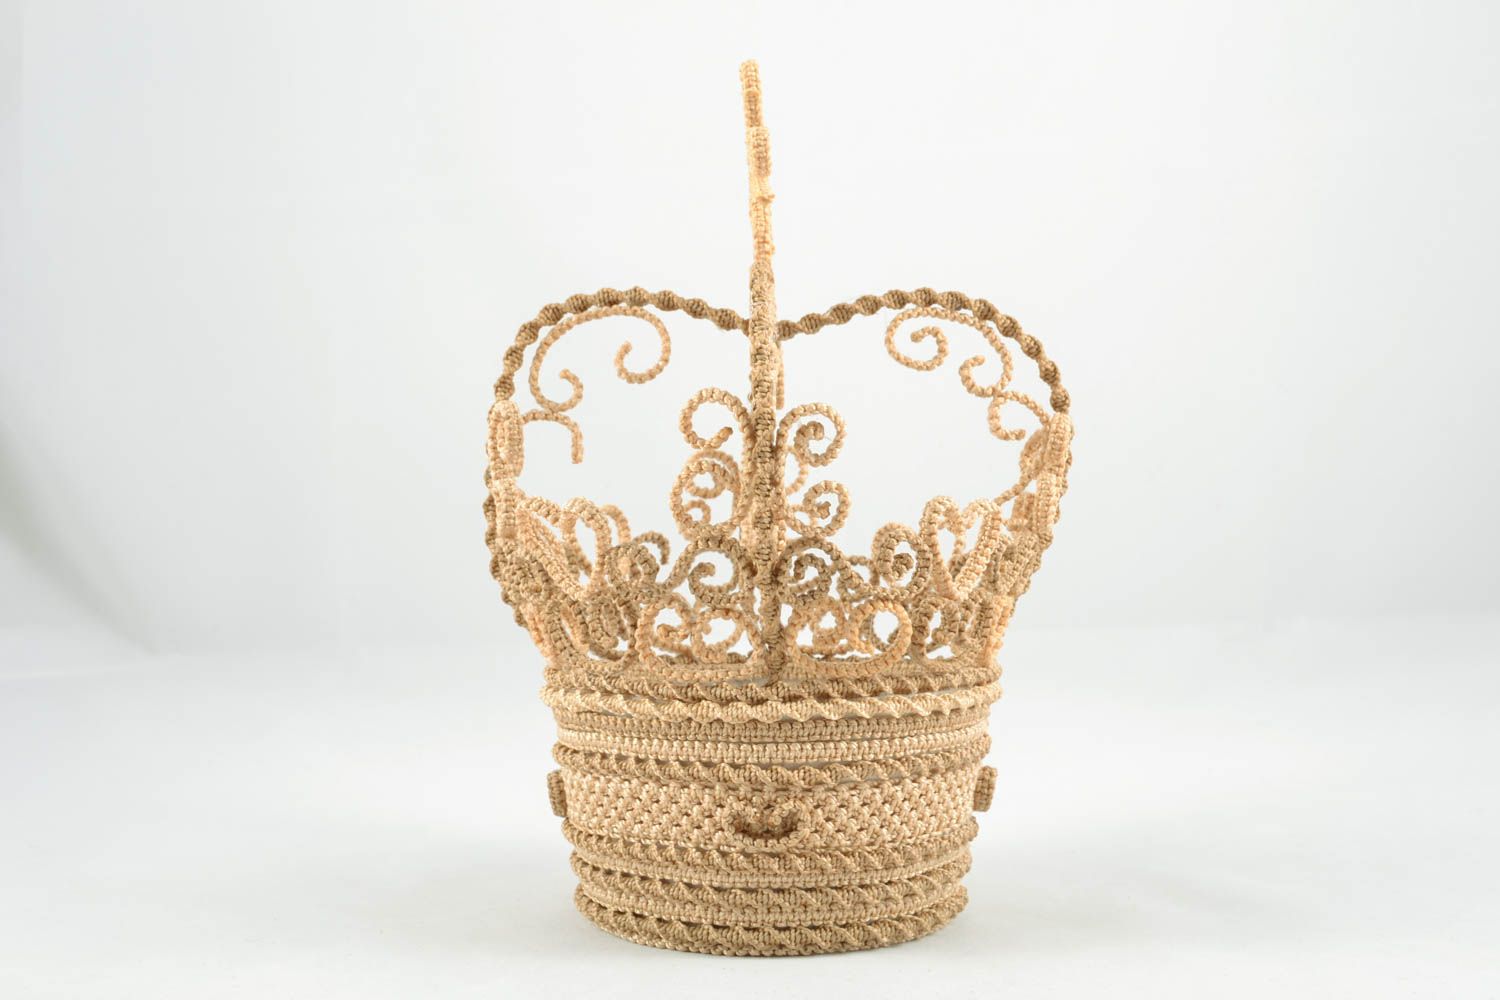 Decorative crown made using macrame technique photo 2